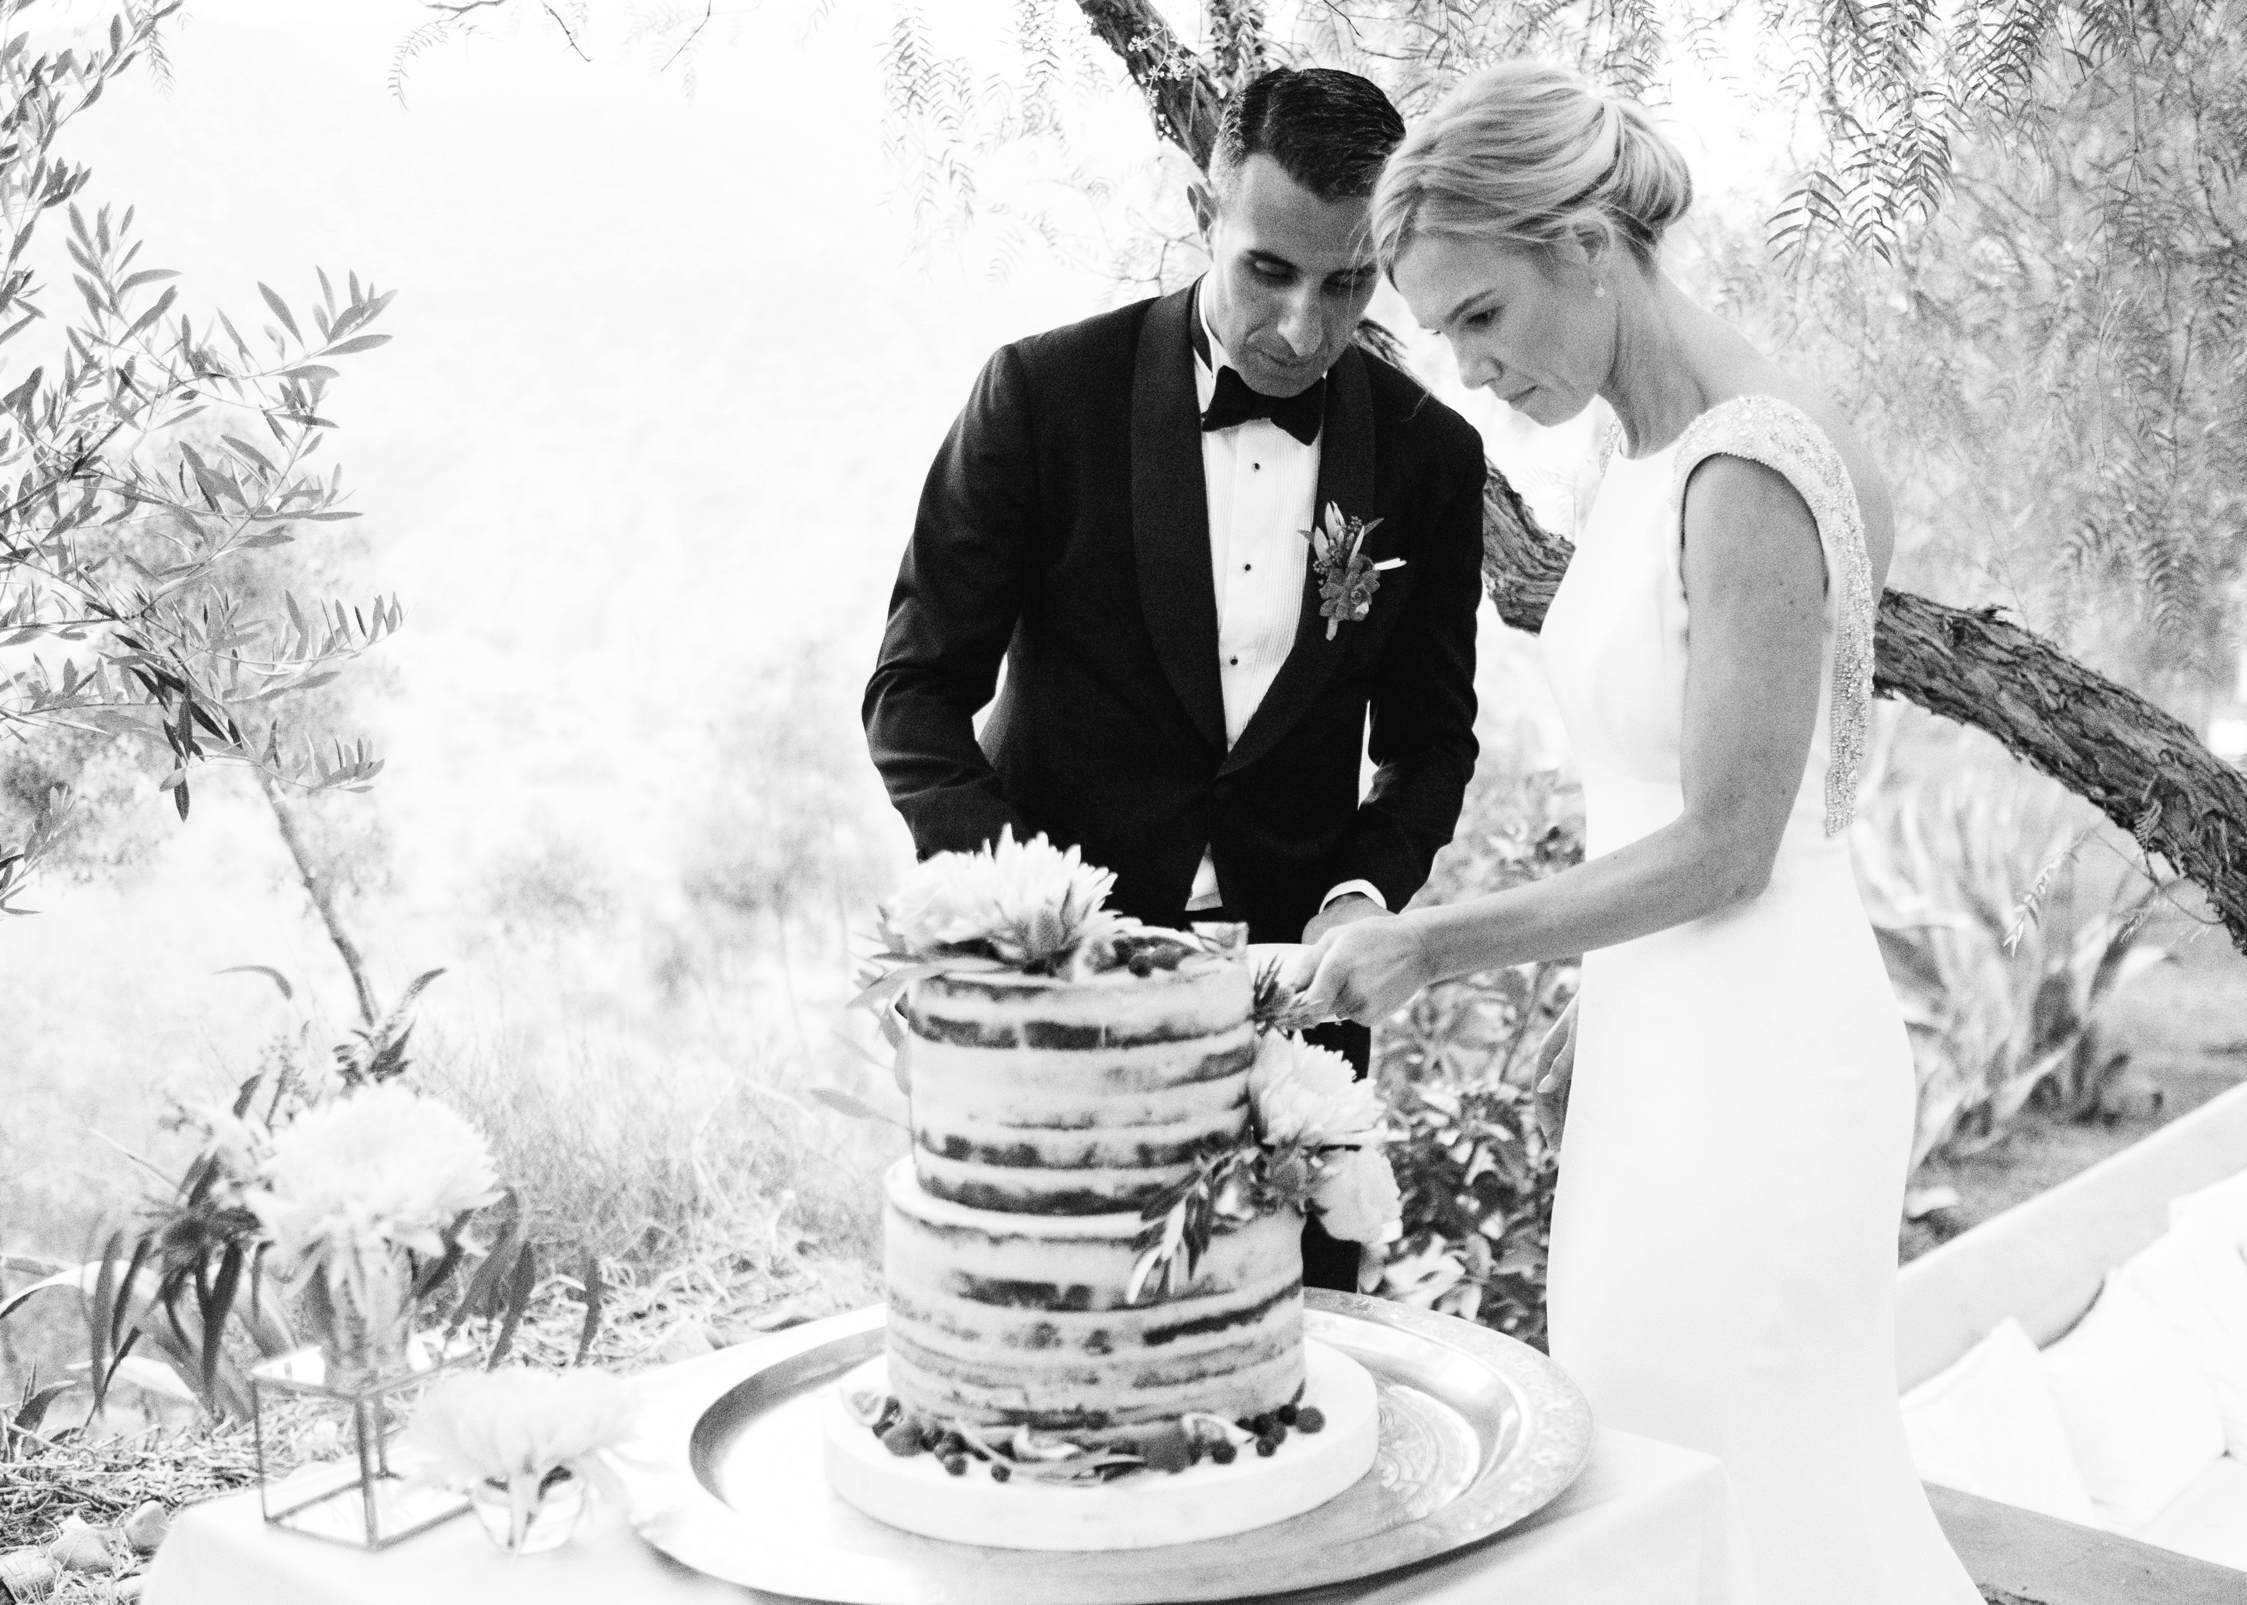 Wedding photographer Marrakech Morocco - Cutting the wedding cake